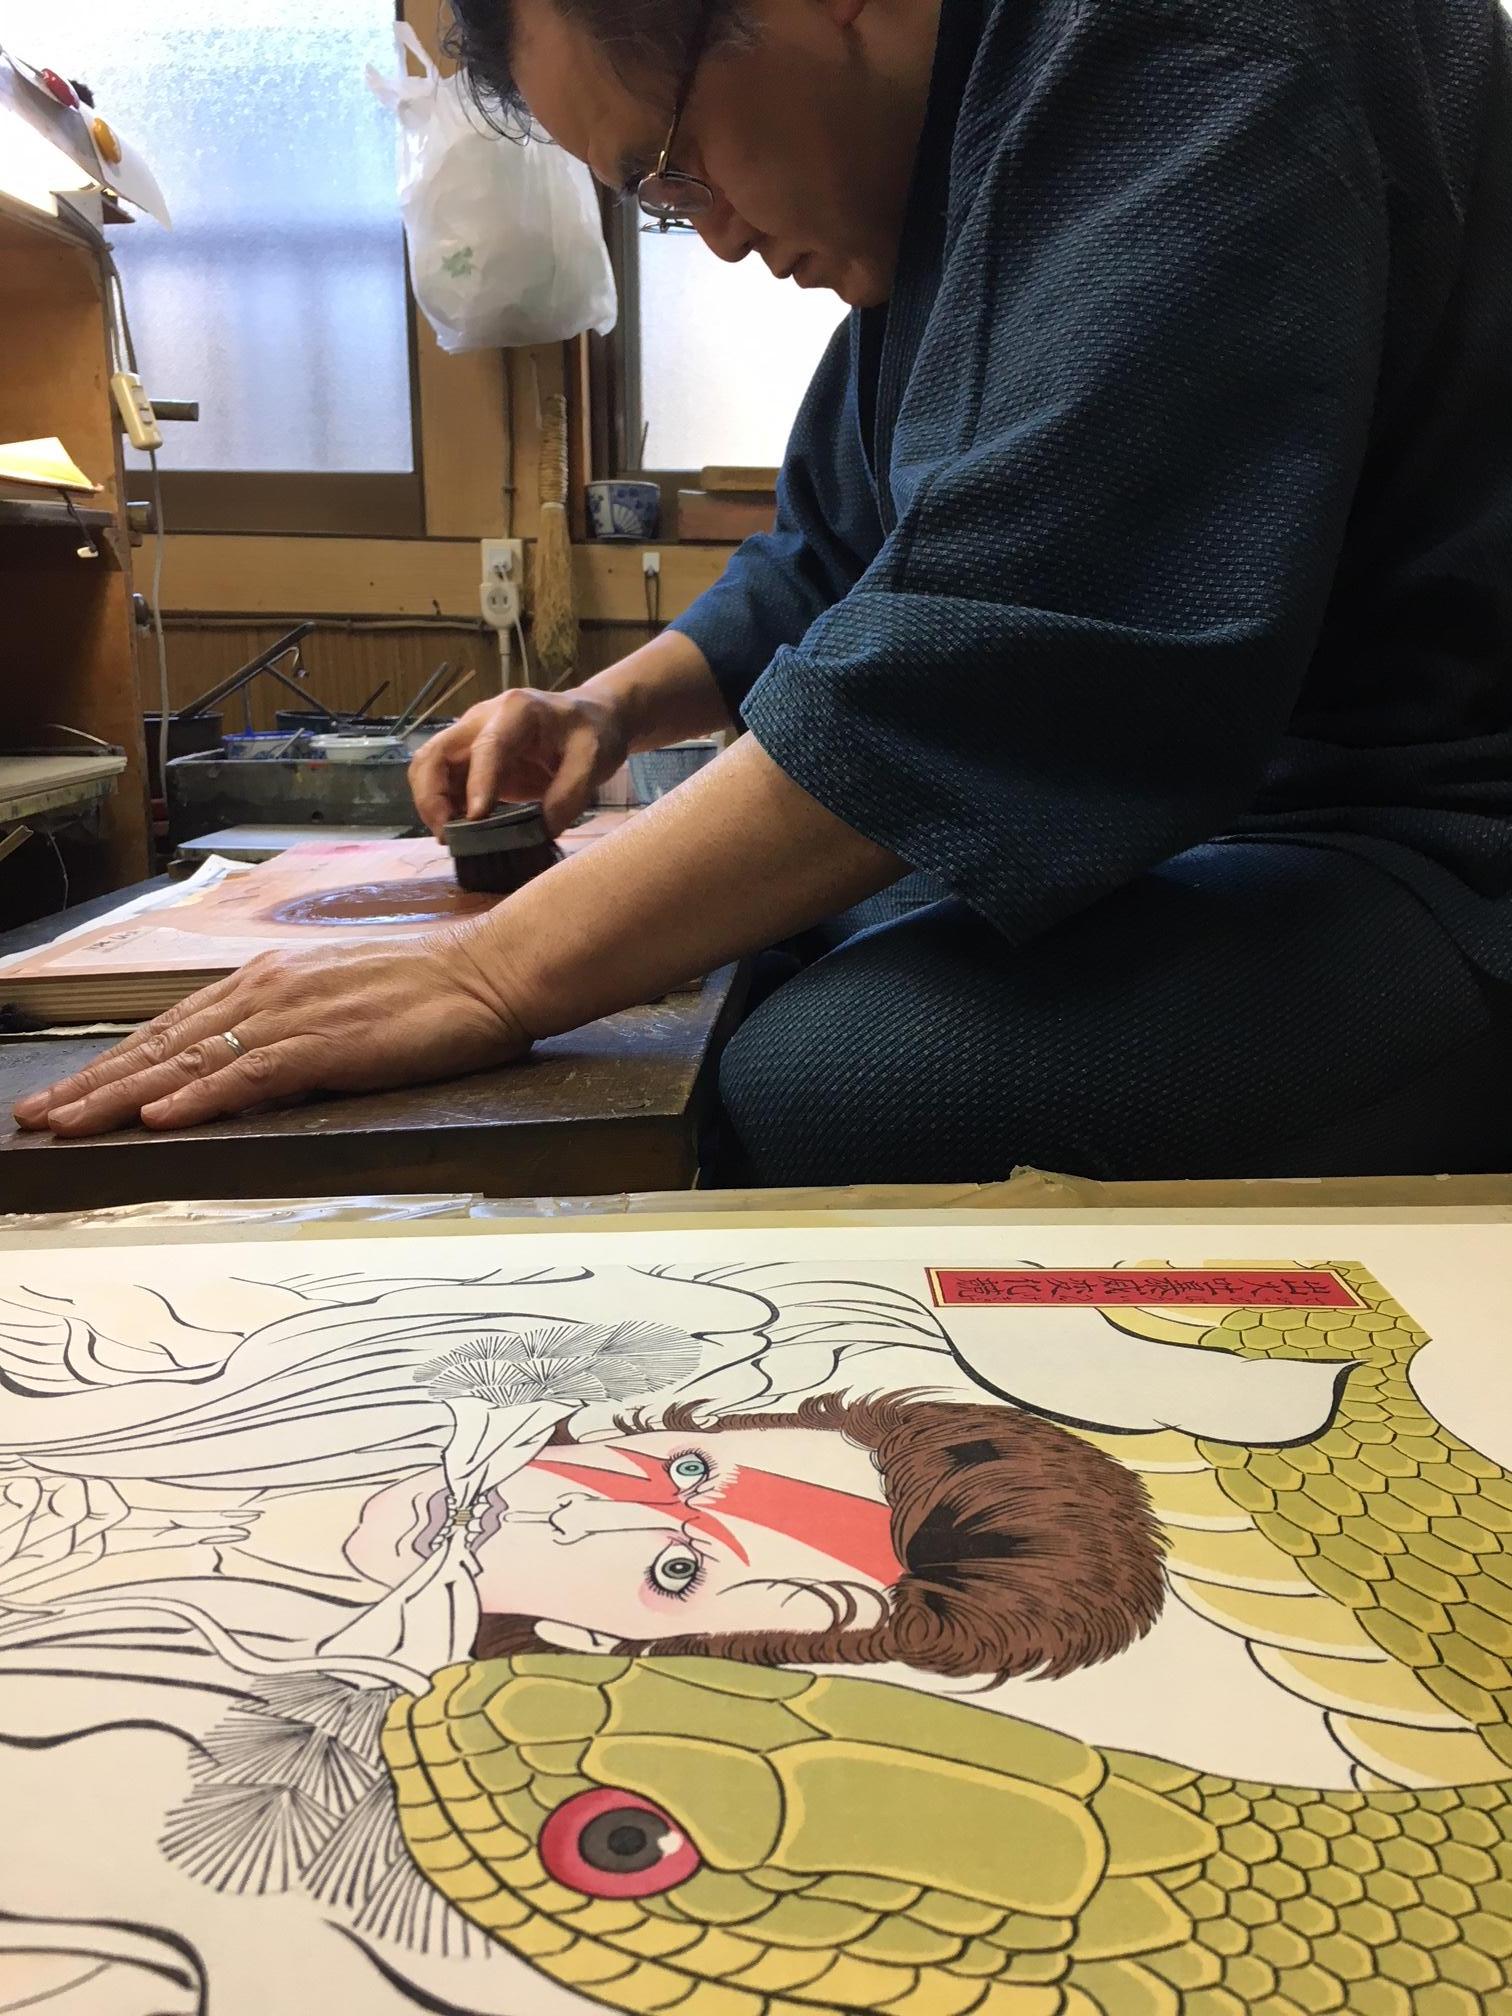 Craftsmen
Illustrator: Ishikawa Masumi
Wood Carver: Sato Nami
Printer: Nakayama Makoto

Details
Edition: limited edition of 200
Size: 18.9 x 13.4 inches (48 x 34 cm)
Paper: Echizen Kizuki Housho


*Attention
- Each work is accompanied by a